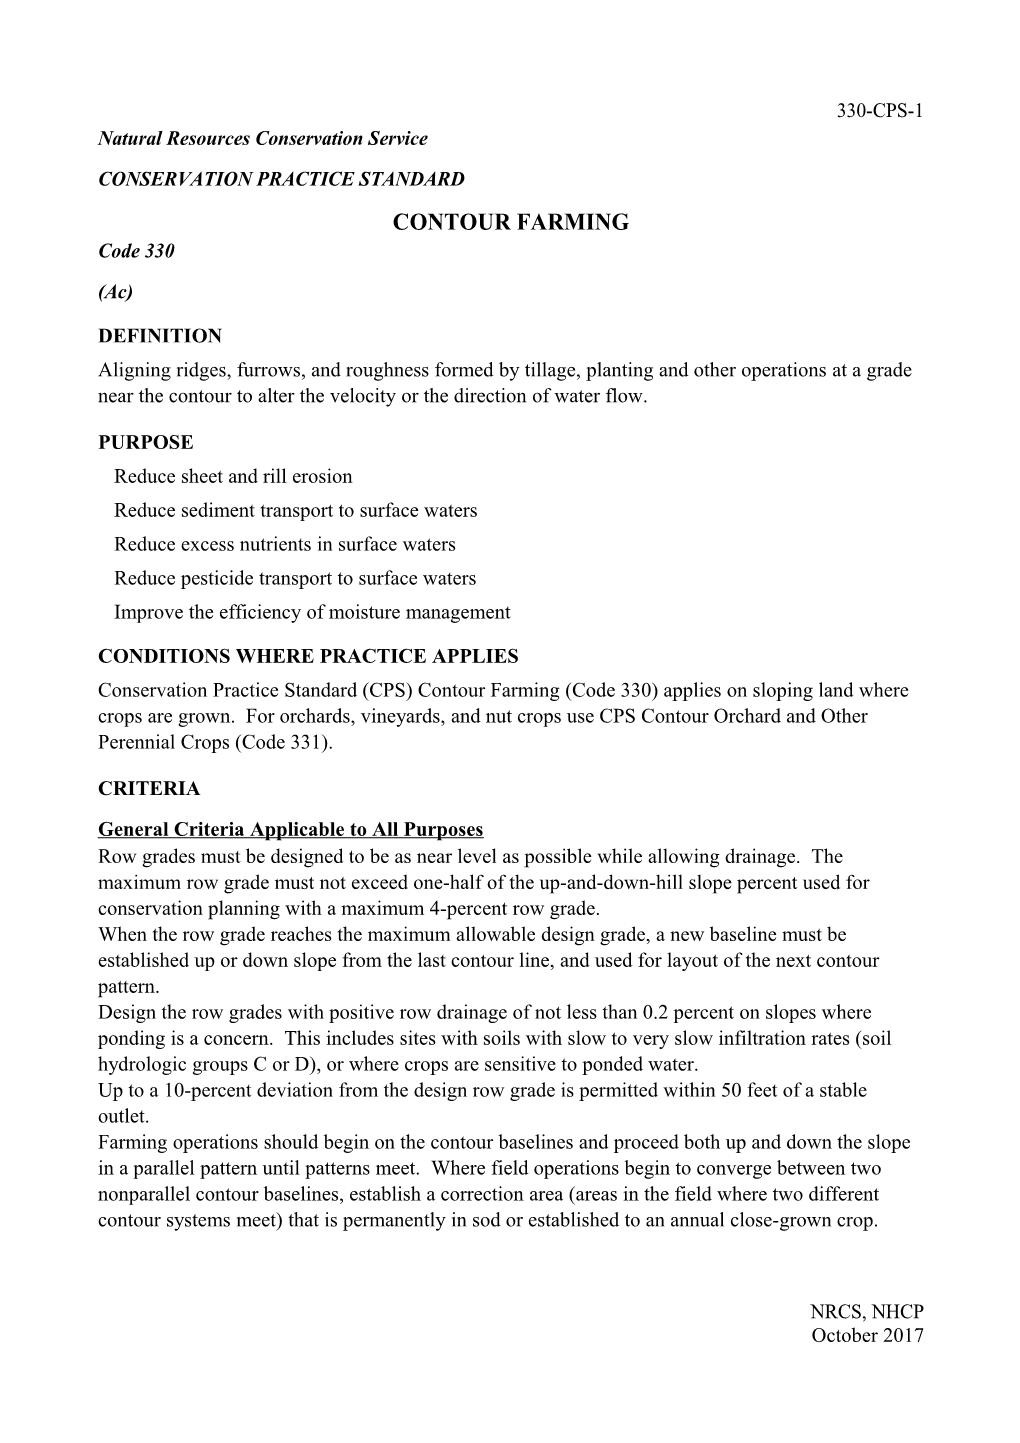 Conservation Practice Standard Contour Farming (Code 330)